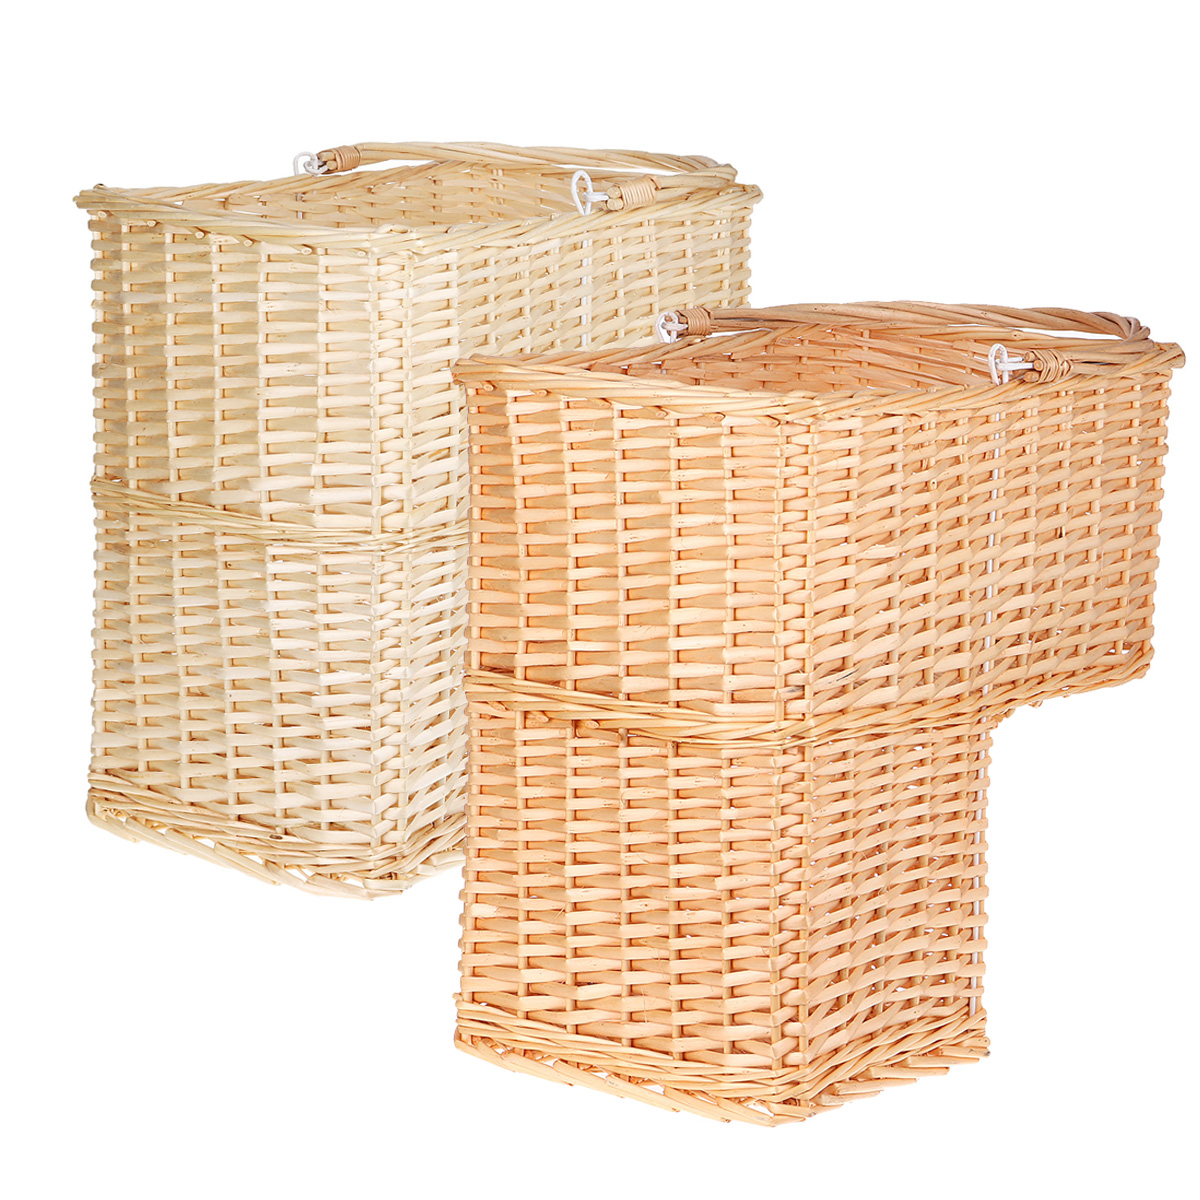 Willow-Woven-Basket-Box-Seagrass-Storage-Hamper-Laundry-Holder-Home-Organizer-1688975-2